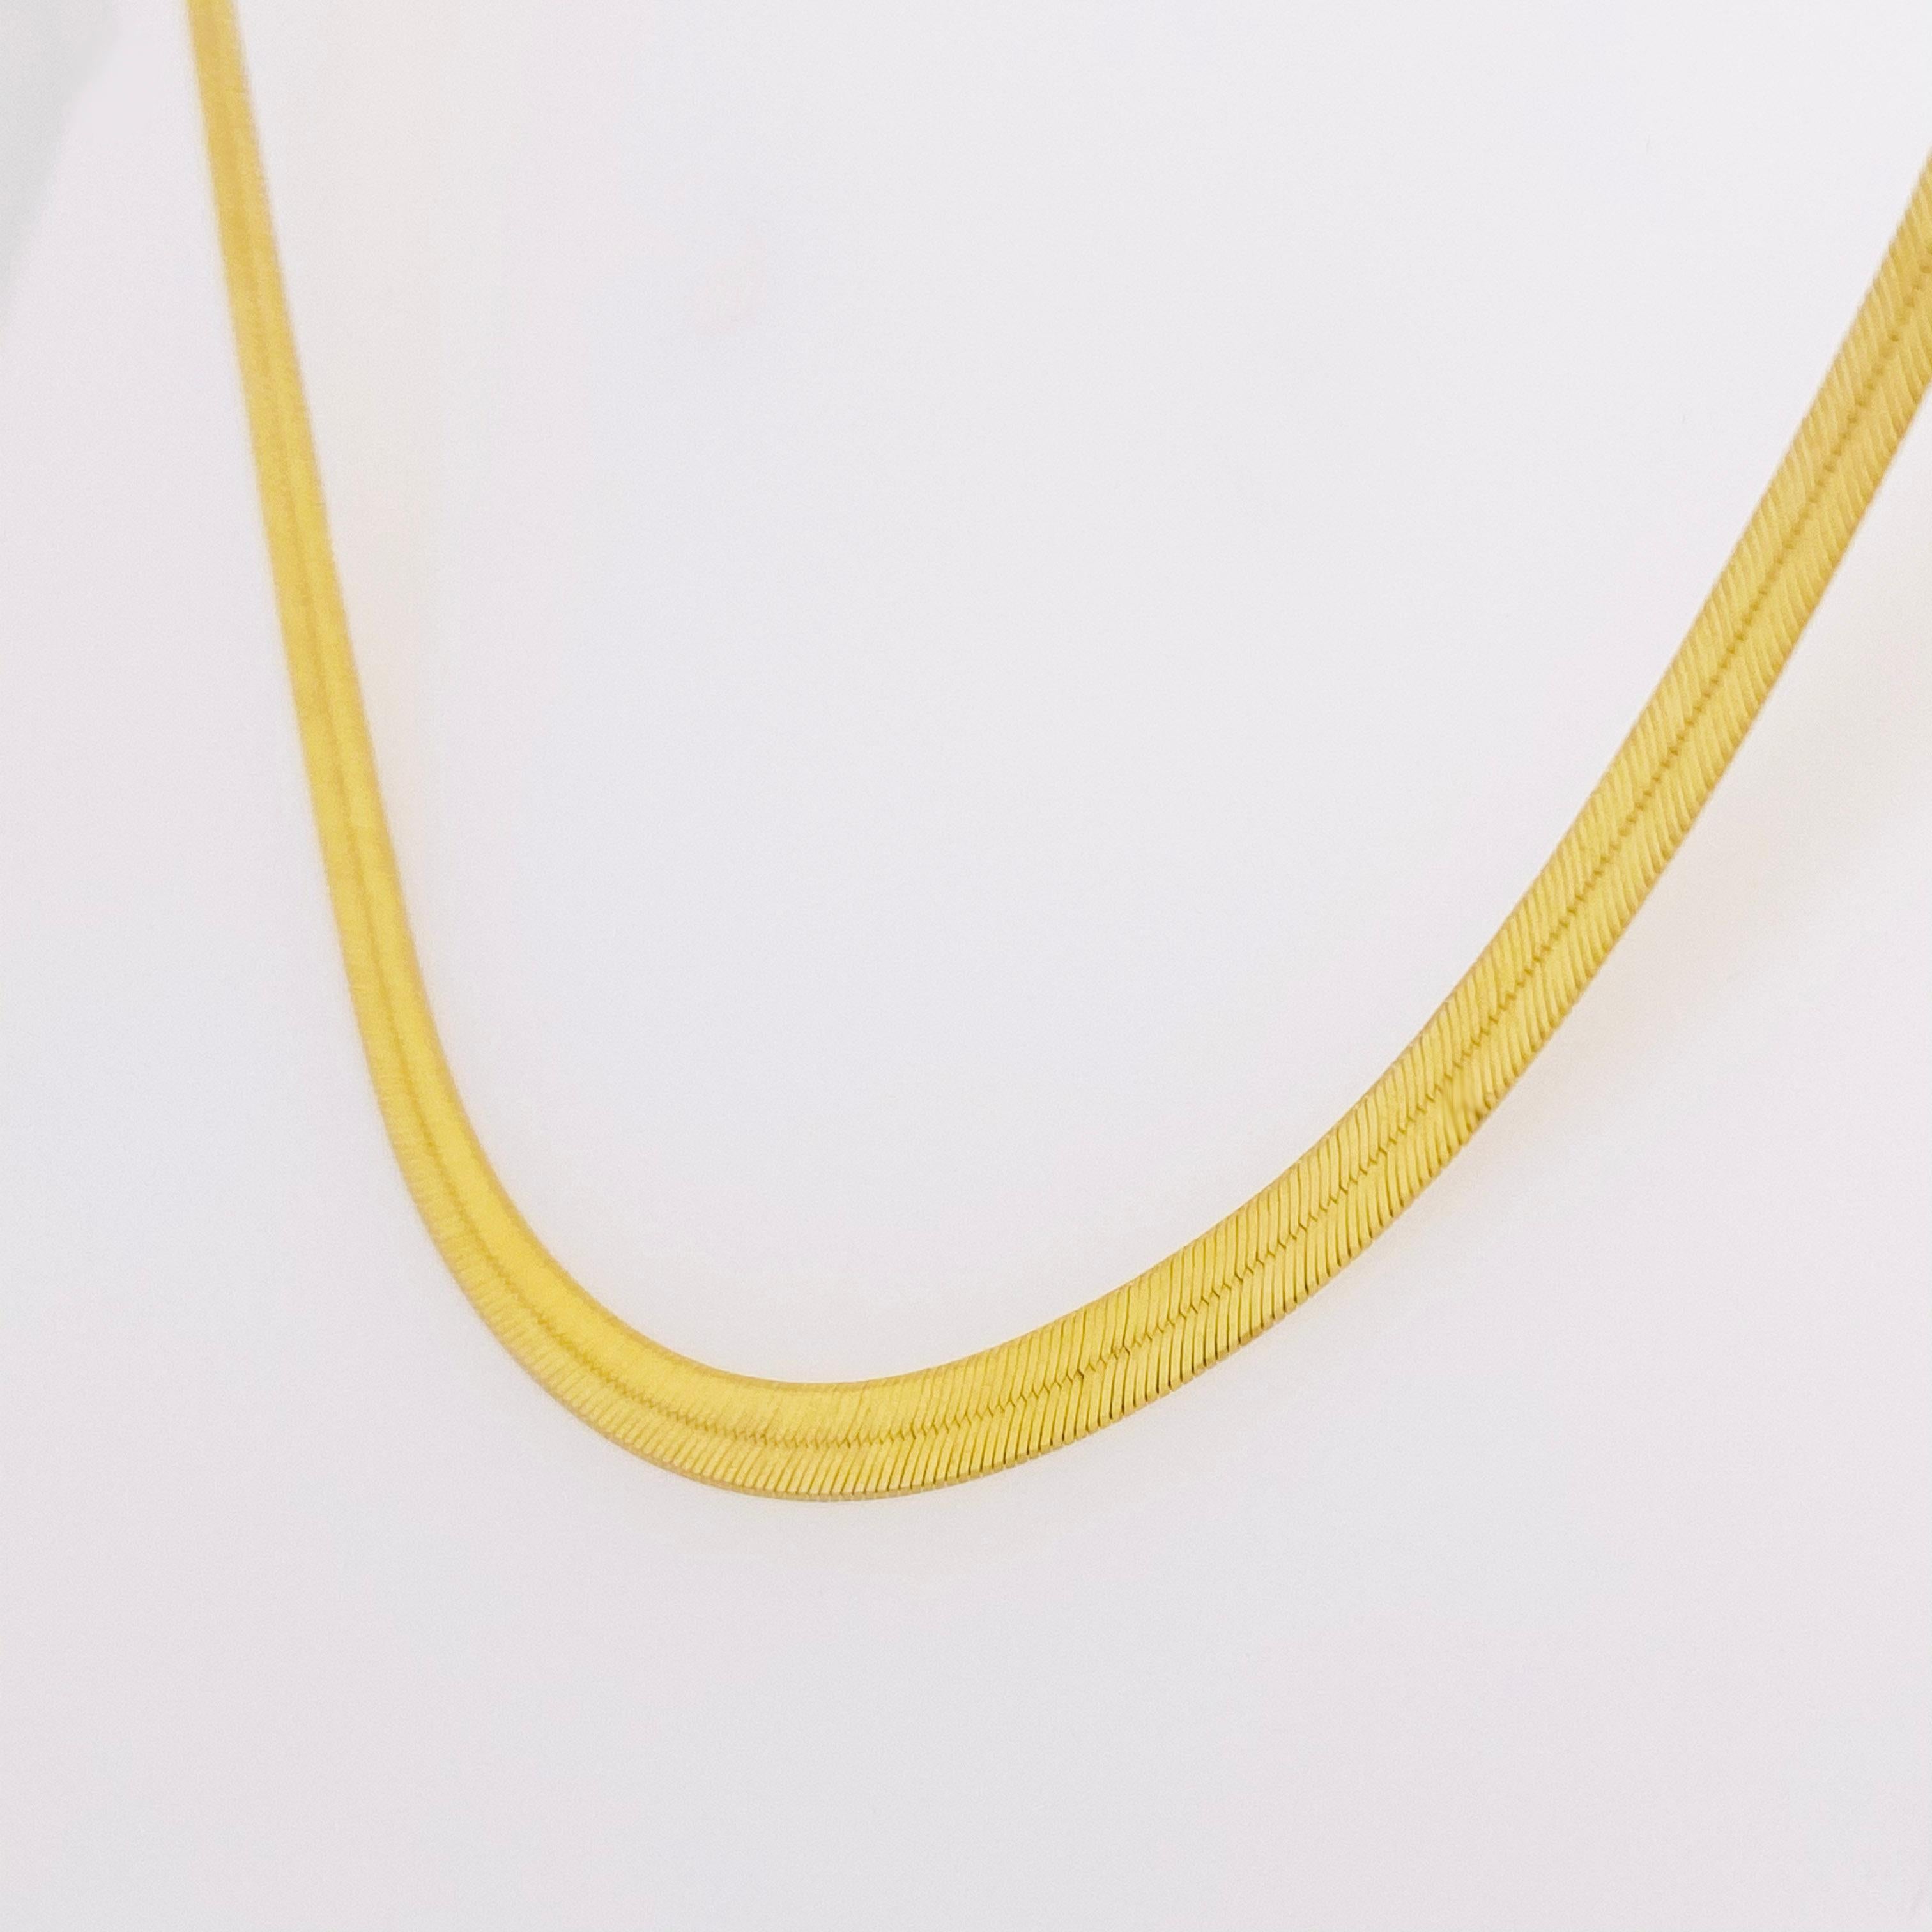 italian gold herringbone necklace